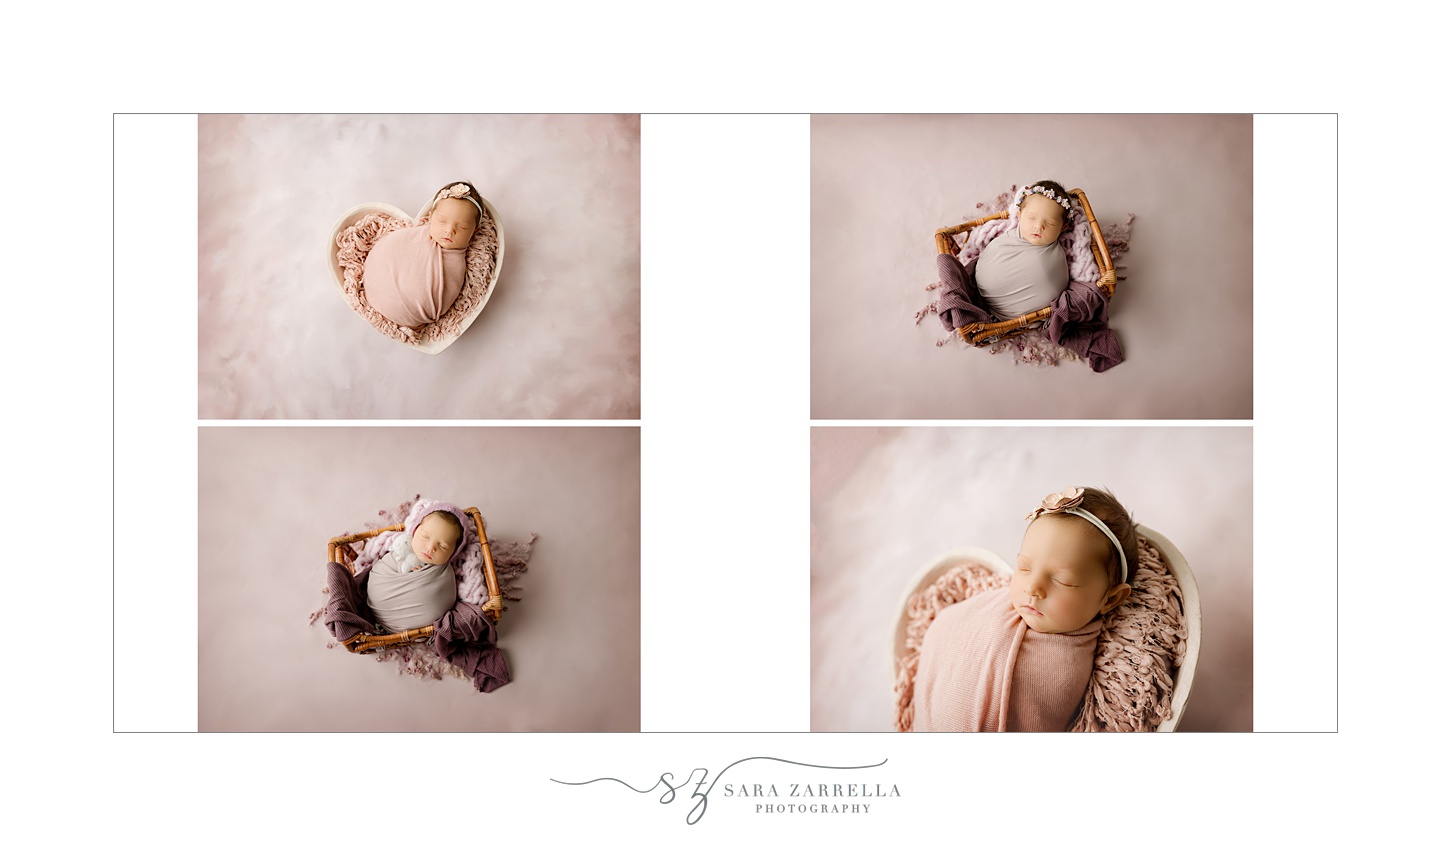 storybook heirloom album for newborn session with RI newborn photographer Sara Zarrella Photography